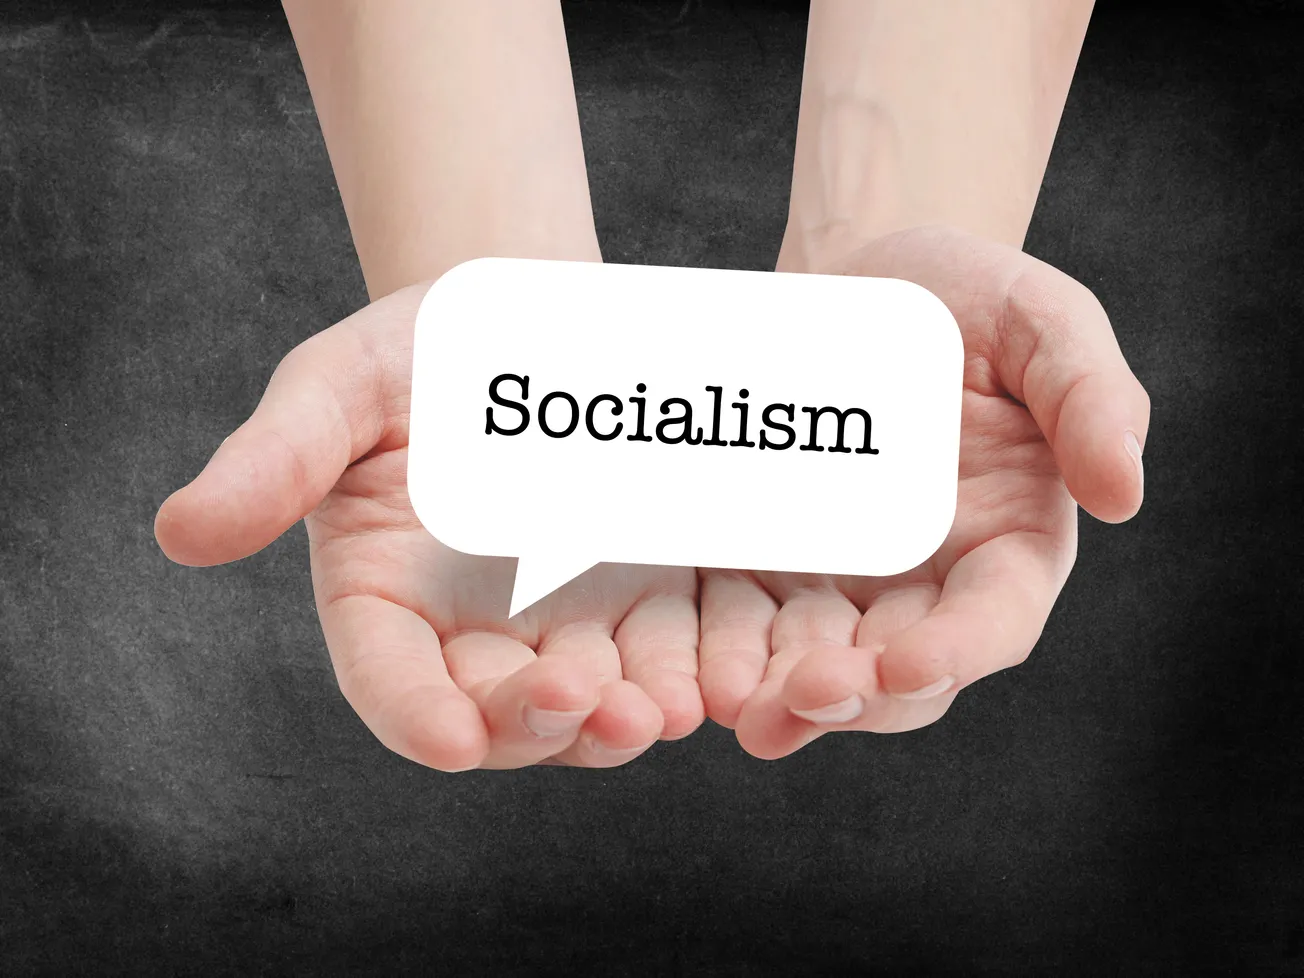 Is U.S. Headed Toward Socialism? Majority Says ‘Yes’: I&I/TIPP Poll